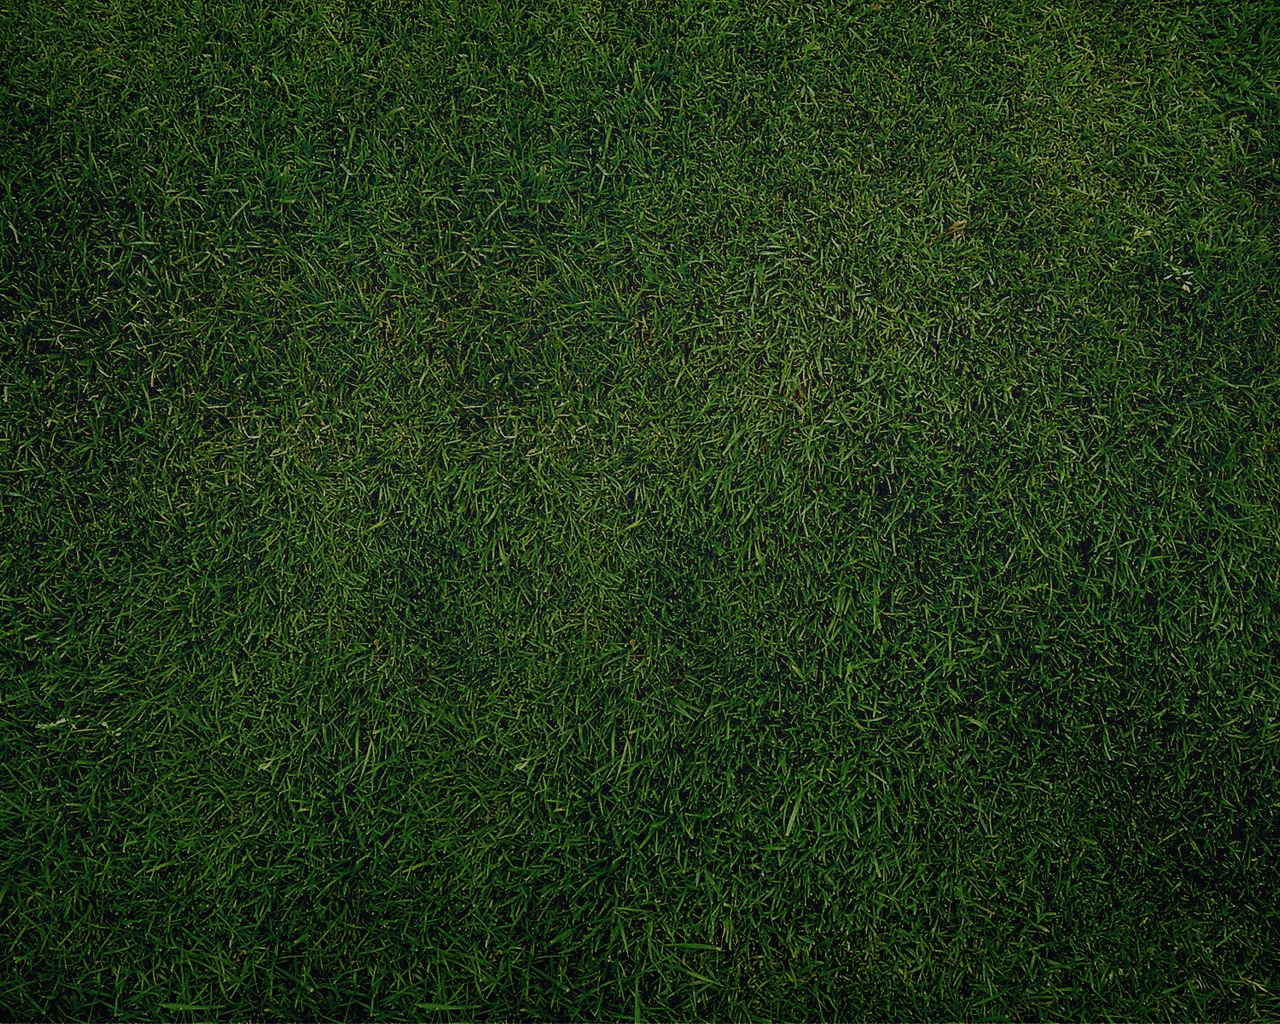 Green Grass for 1280 x 1024 resolution